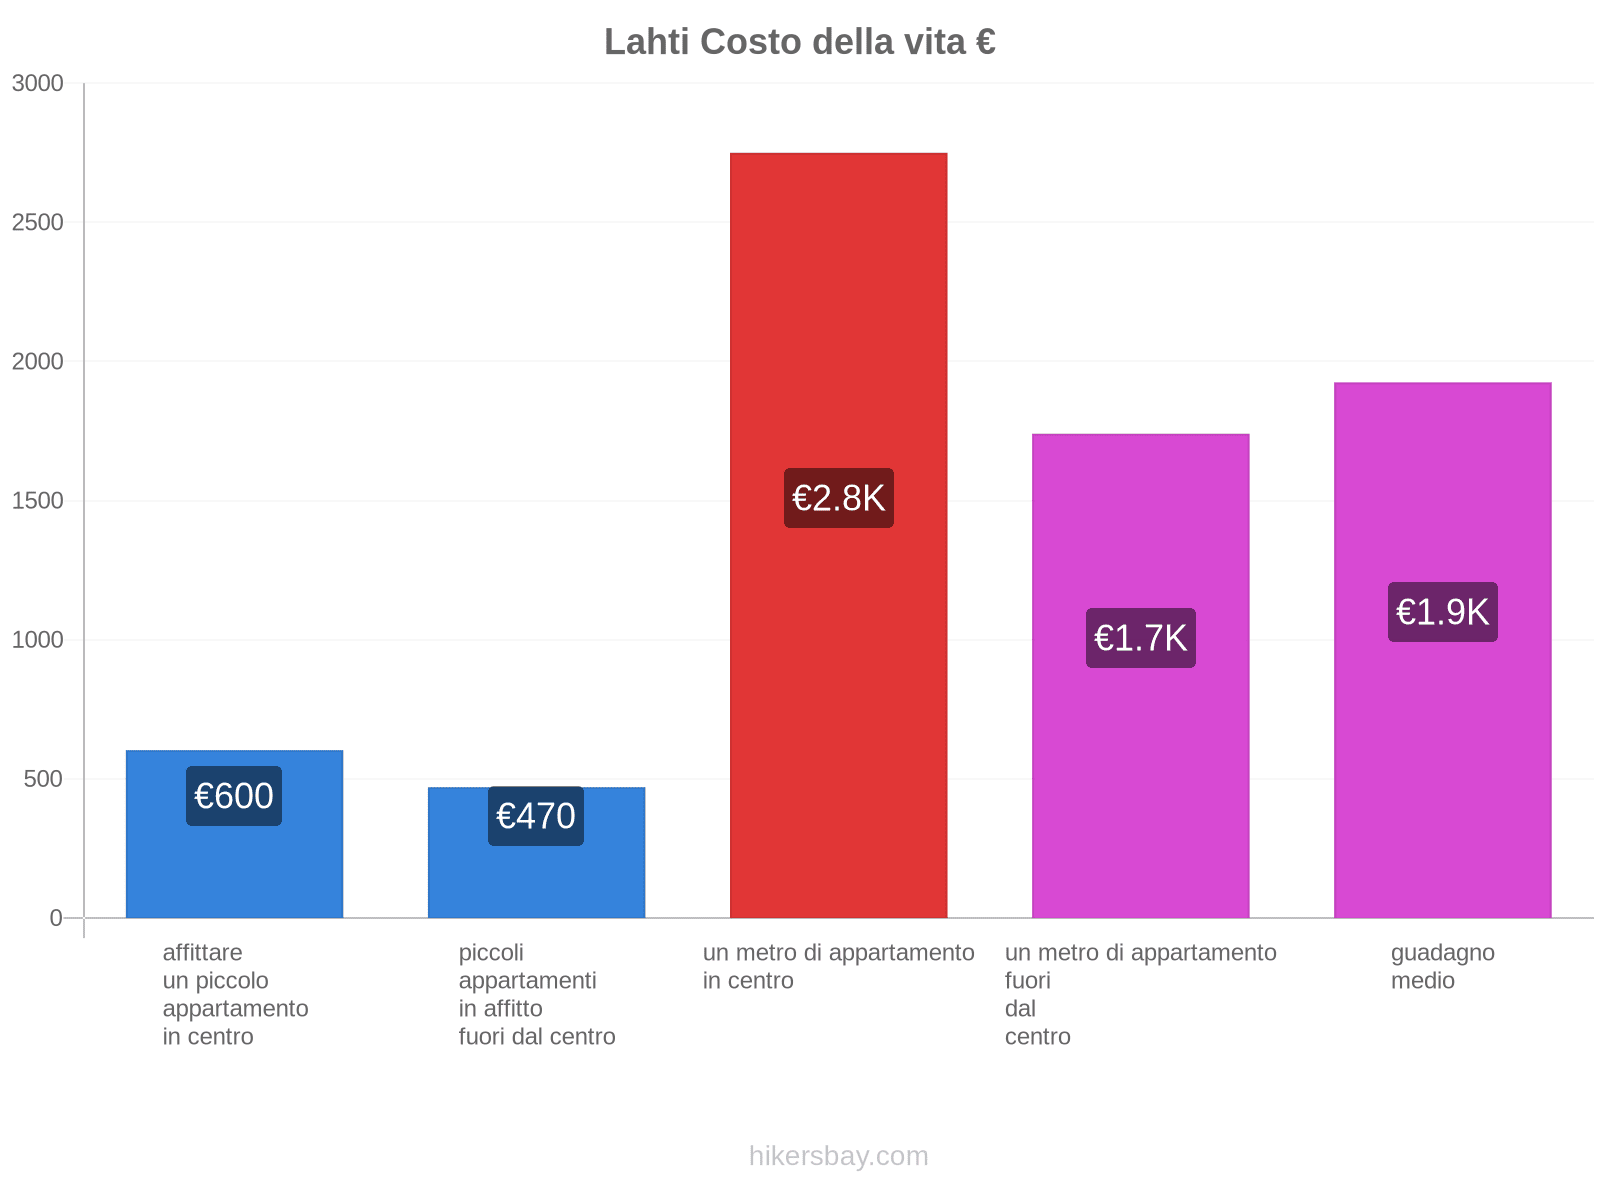 Lahti costo della vita hikersbay.com